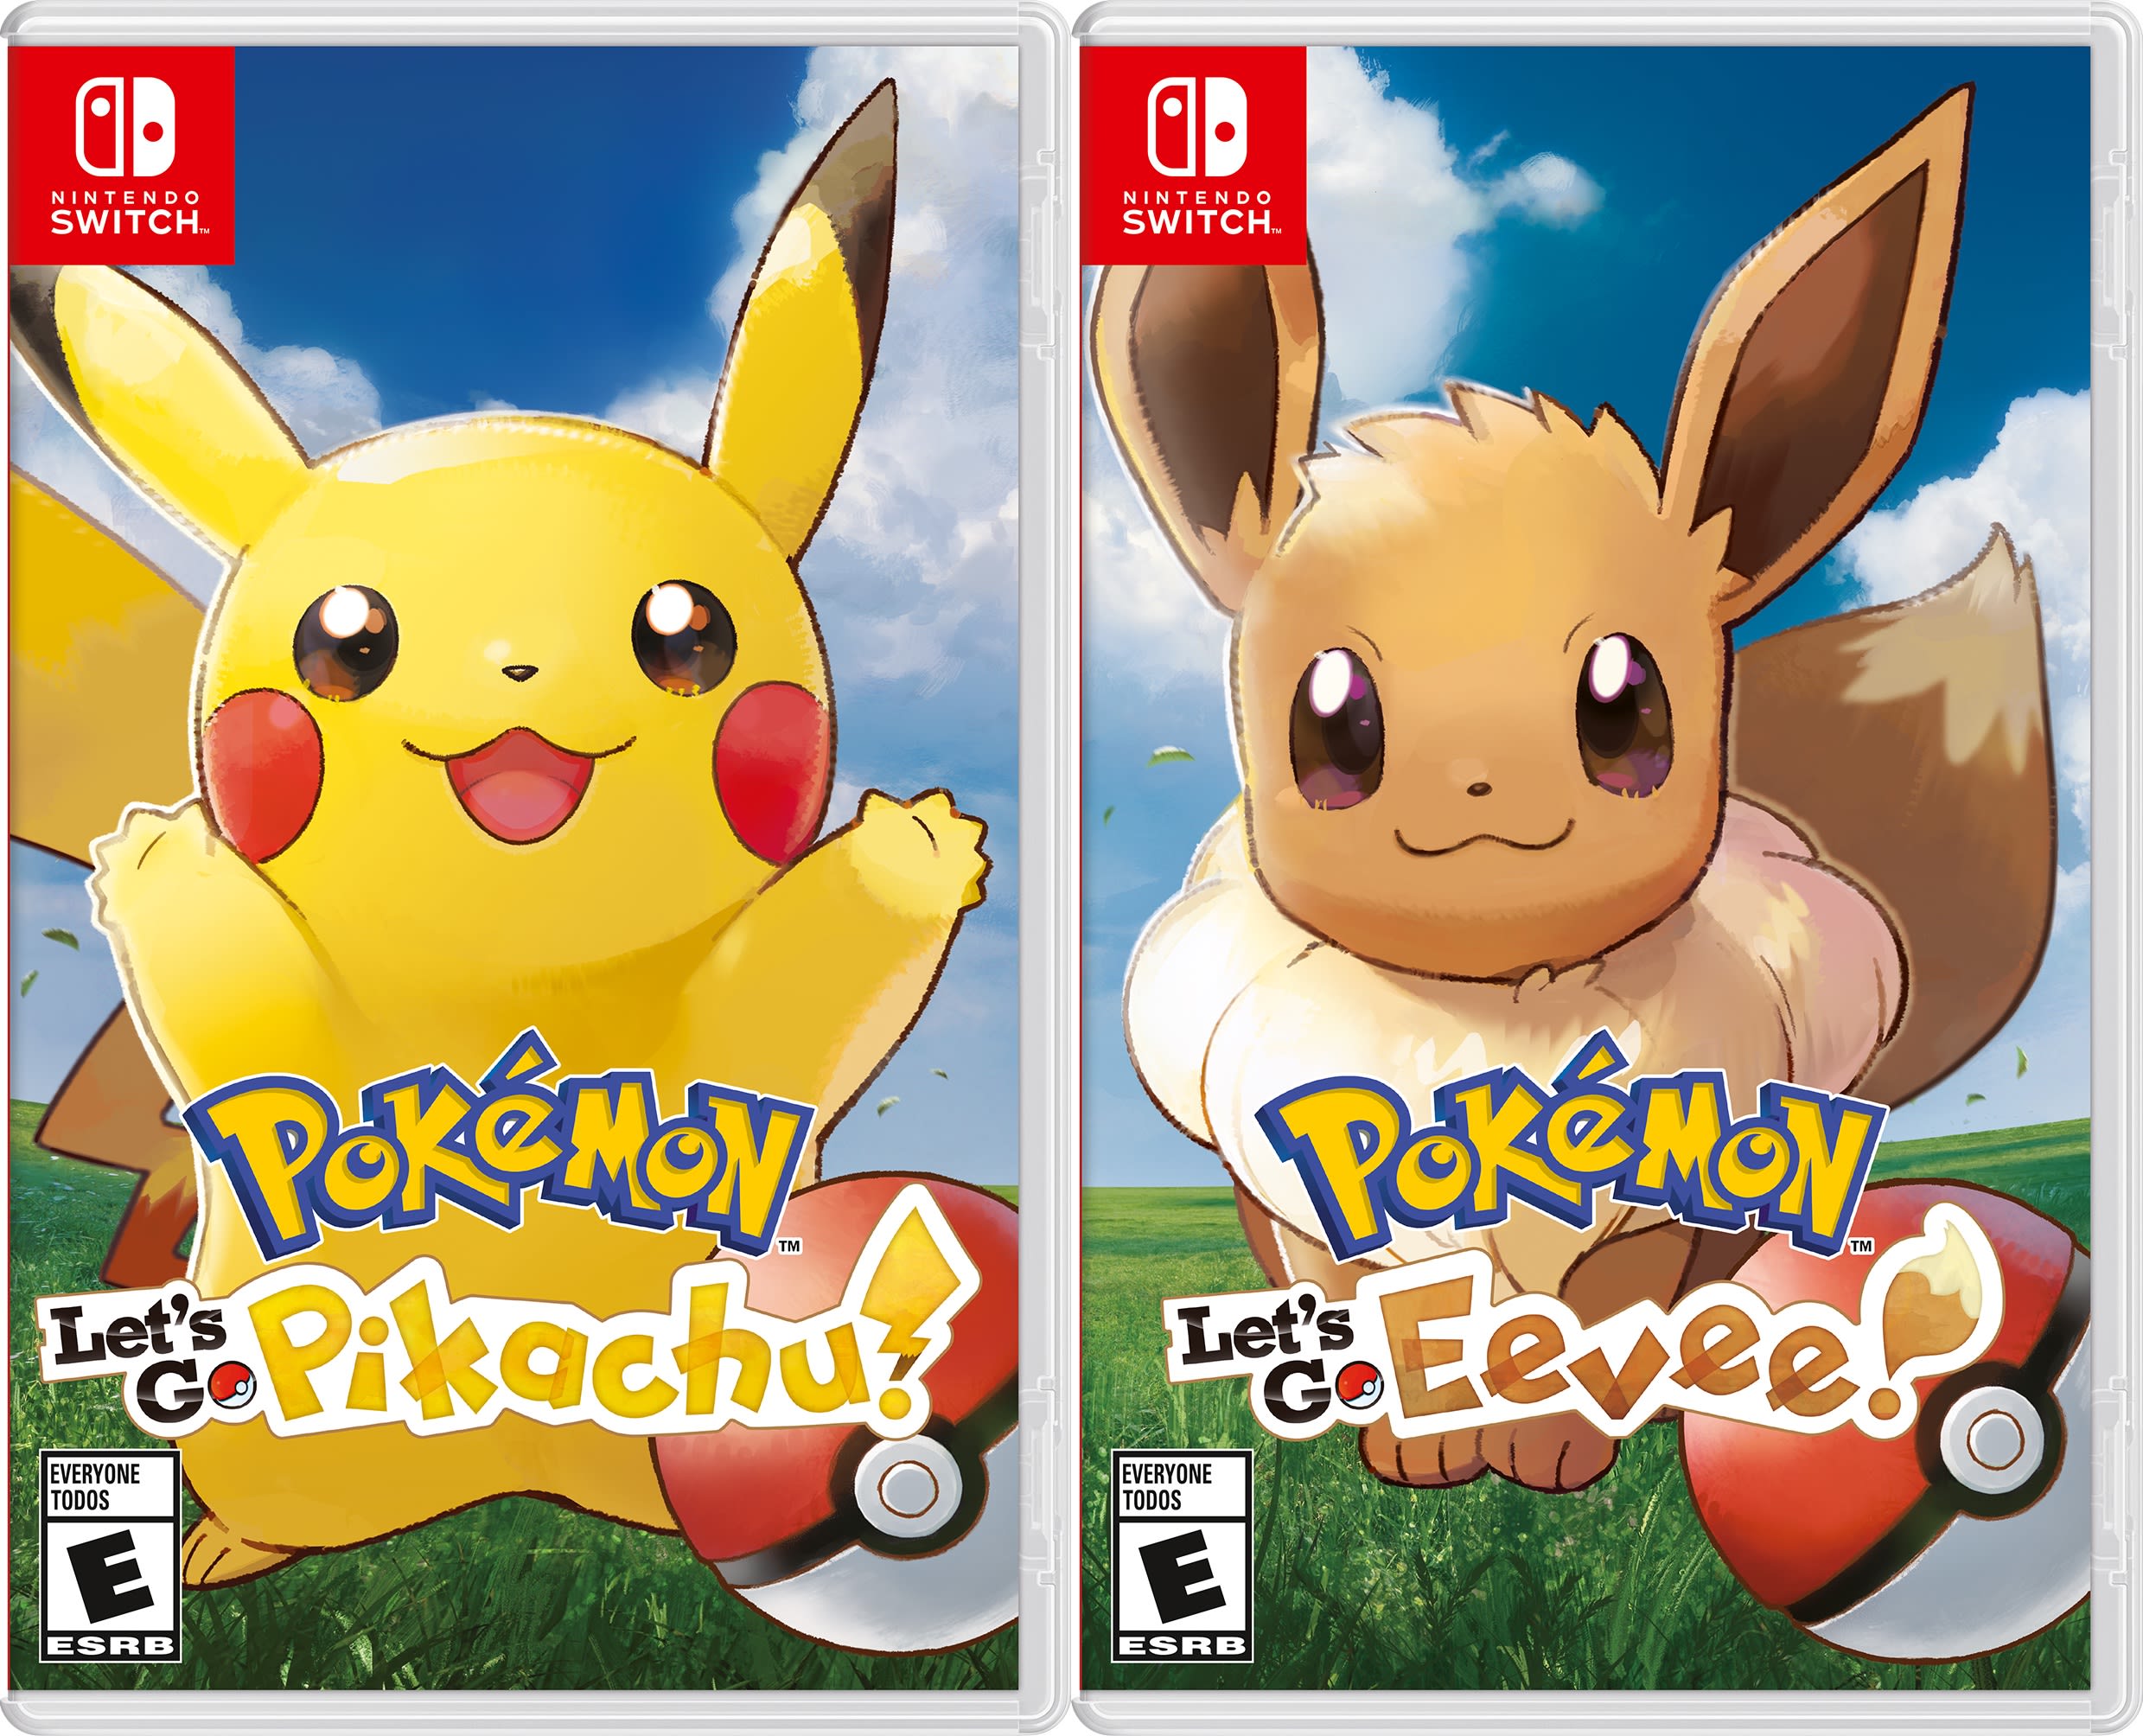 Nintendo Switch Pokemon Let's Go Pikachu : Eevee